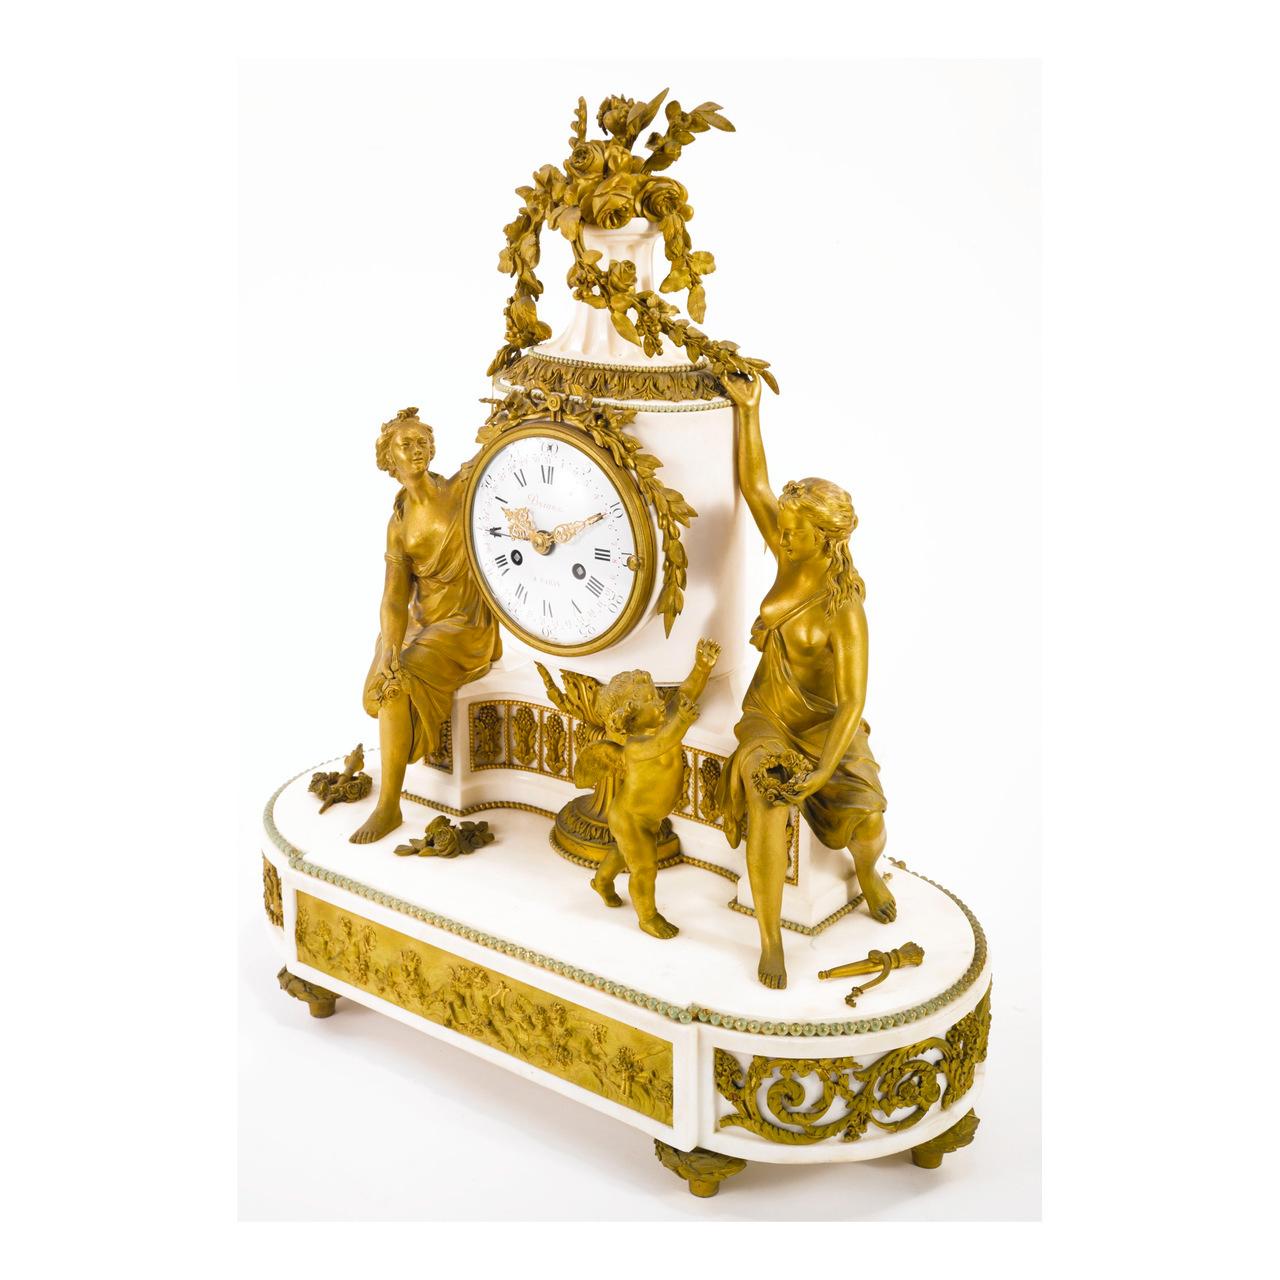 An exquisite Louis XVI style gilt bronze and white marble mantel clock with enamel dial by Eugène Hazart
inscribed Briant / A PARIS in enamel dial; Etiènne Maxant seal, numbered 15614; engraved Eug. Hazart, Paris

Maker: Eugène Hazart